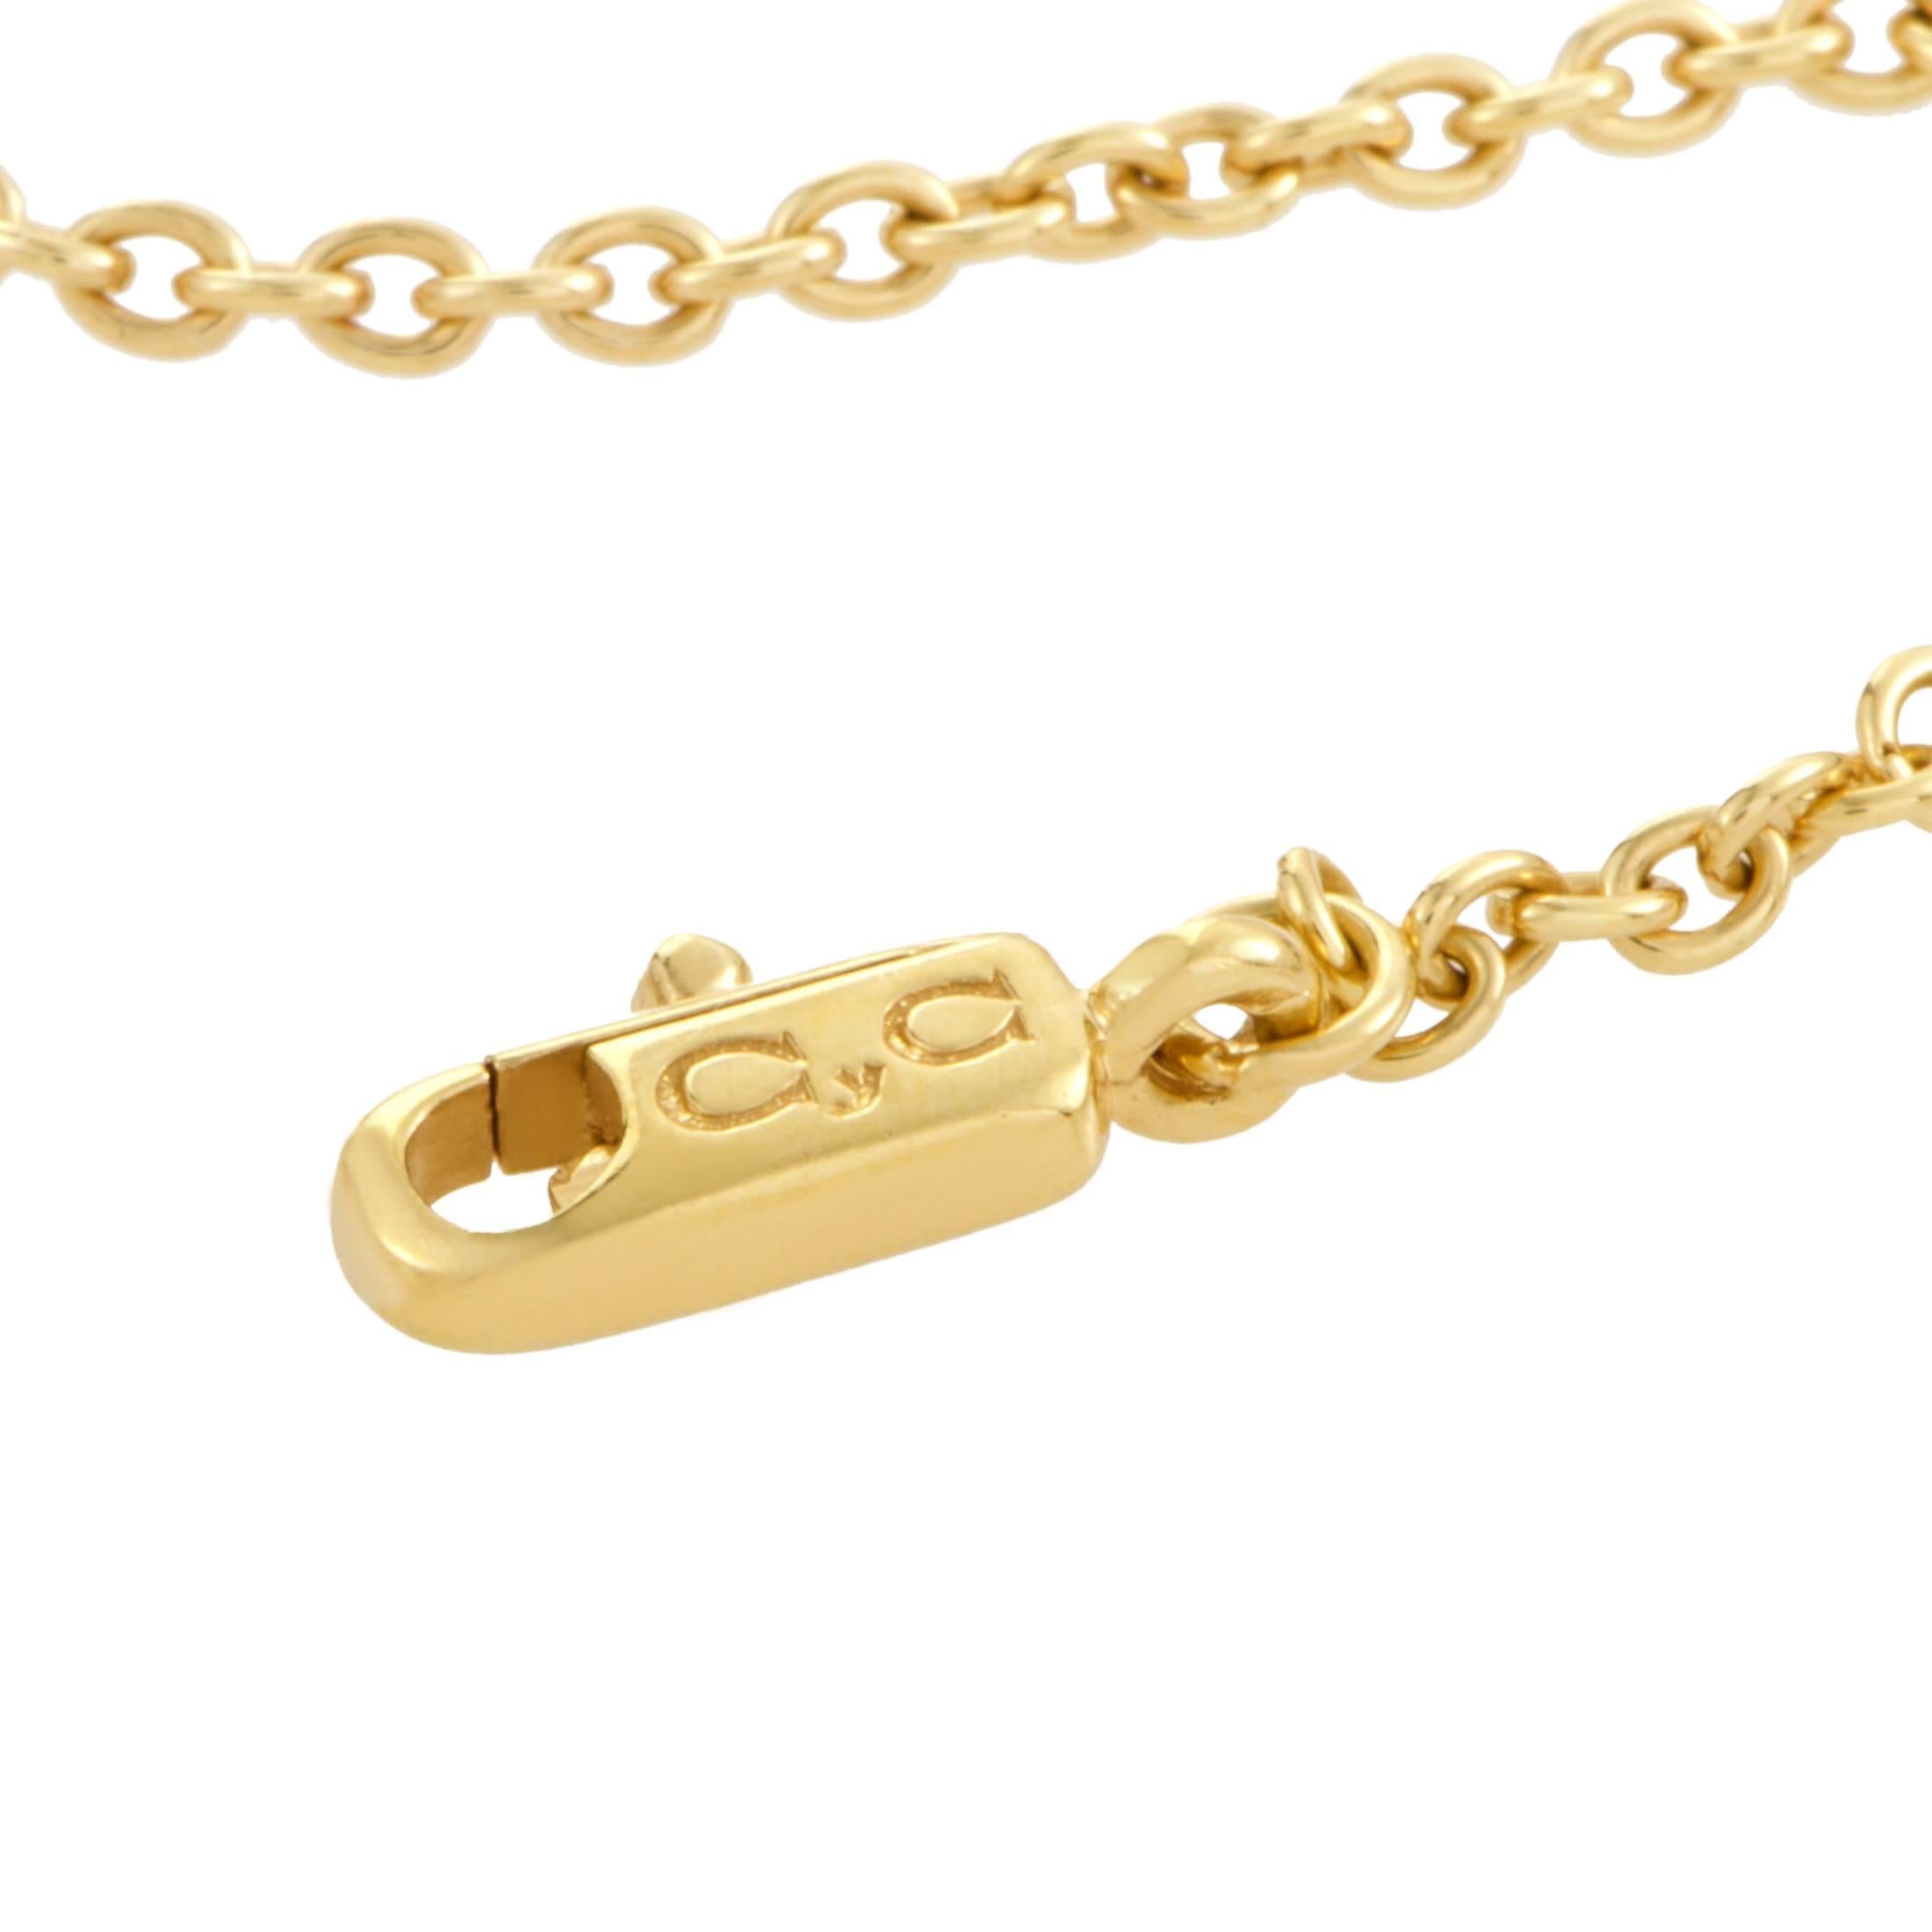 Women's Carrera y Carrera Aqua Women’s 18 Karat Yellow Gold Pendant Necklace